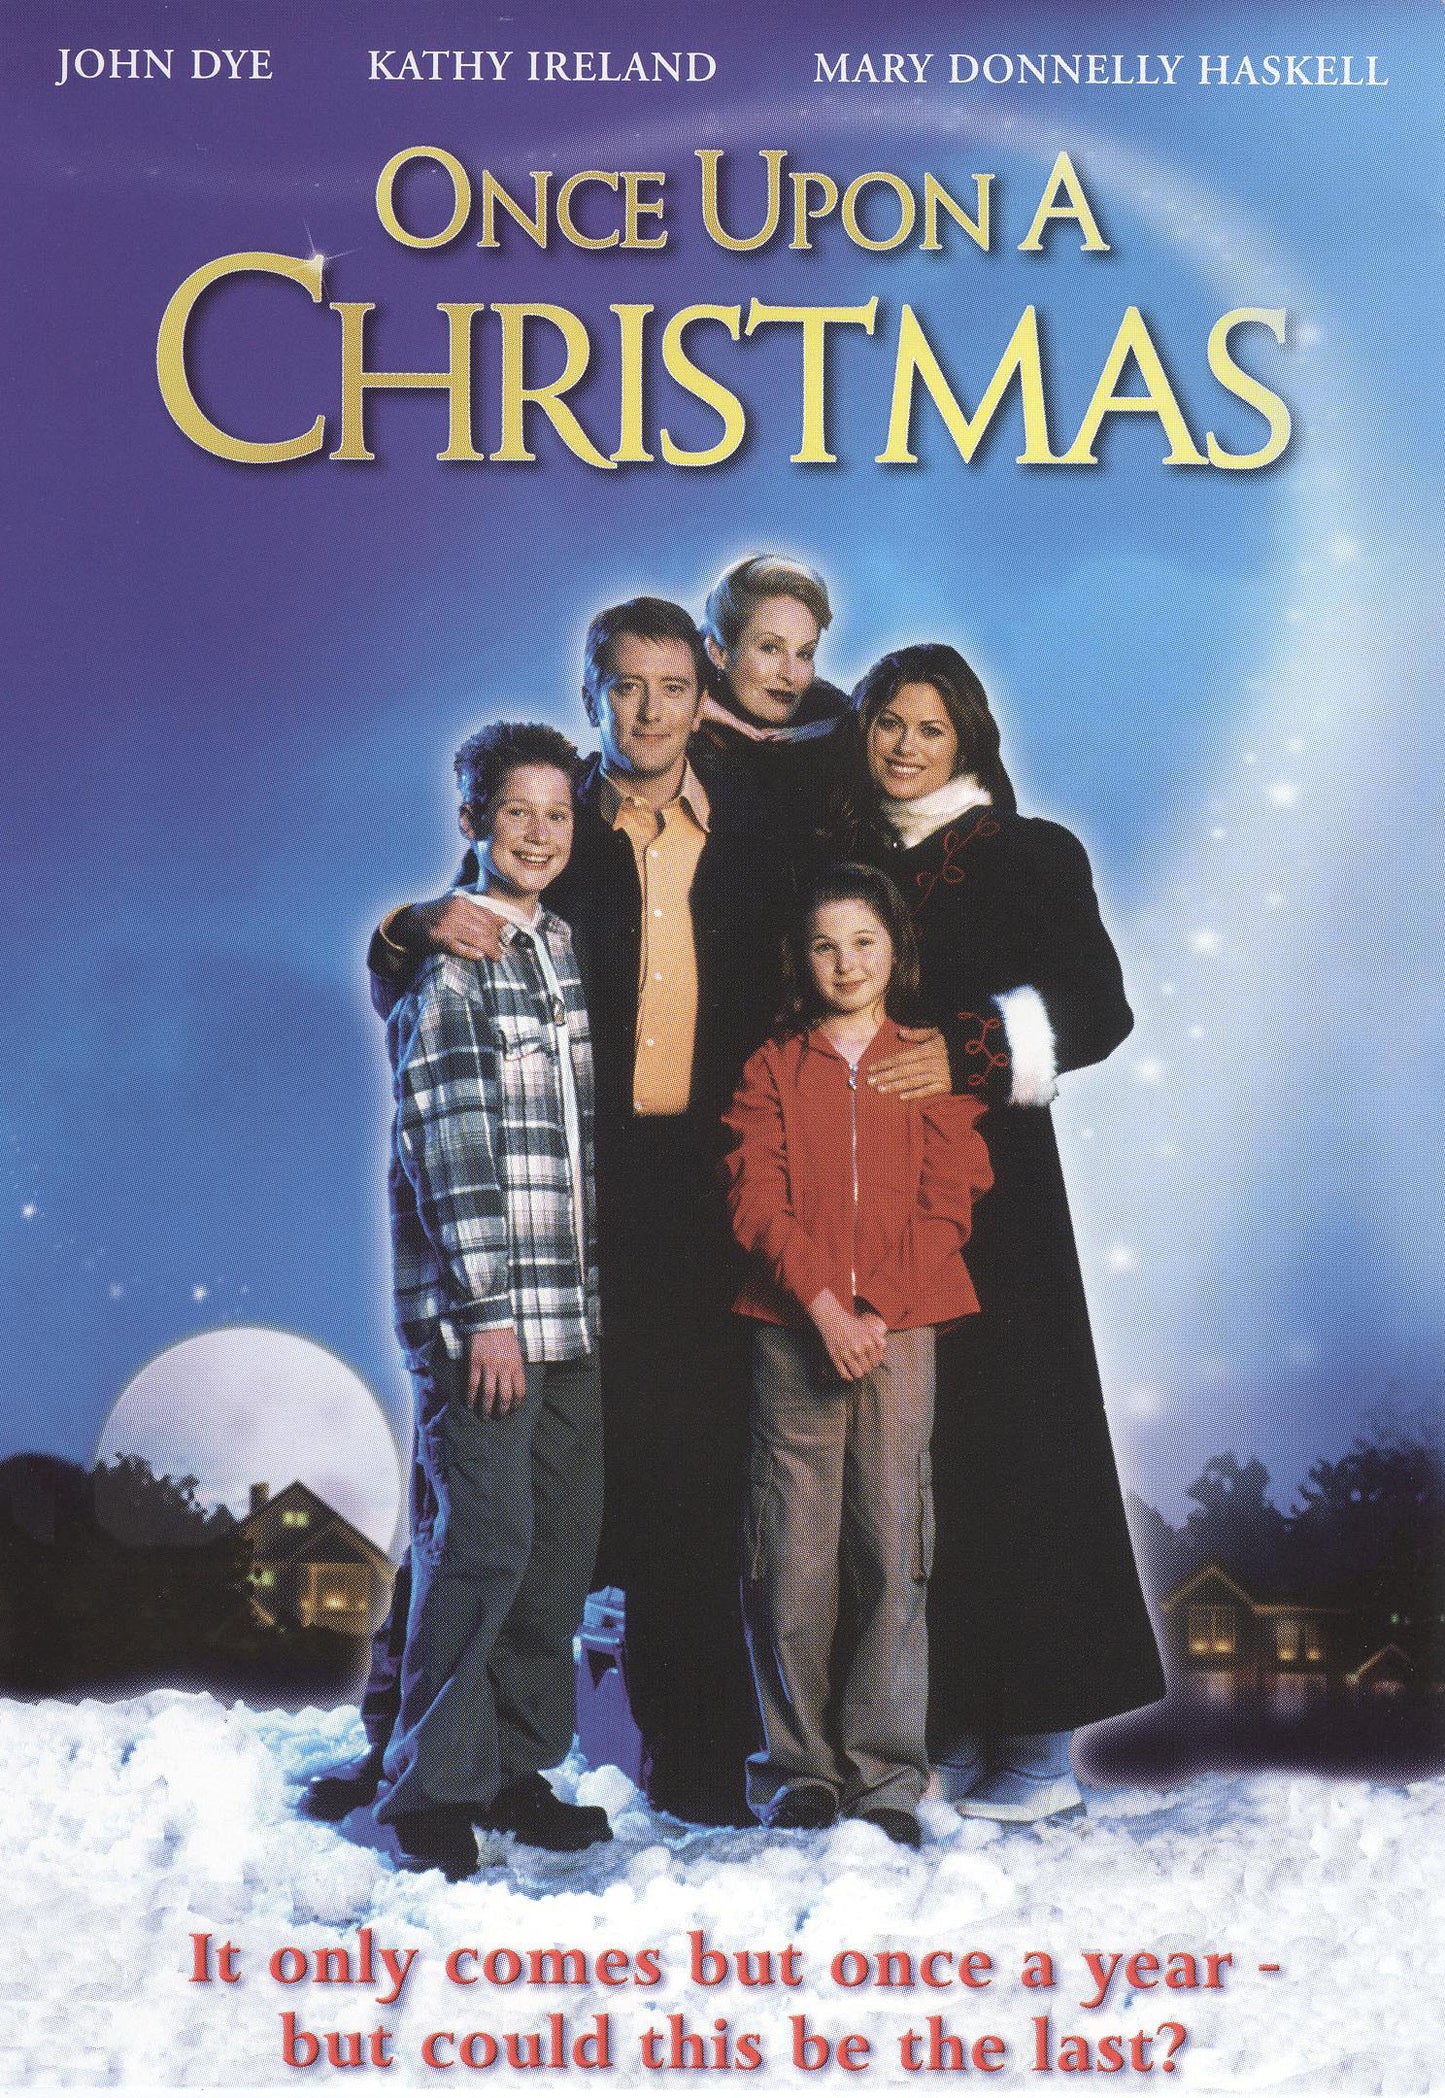 Once Upon a Christmas cover art